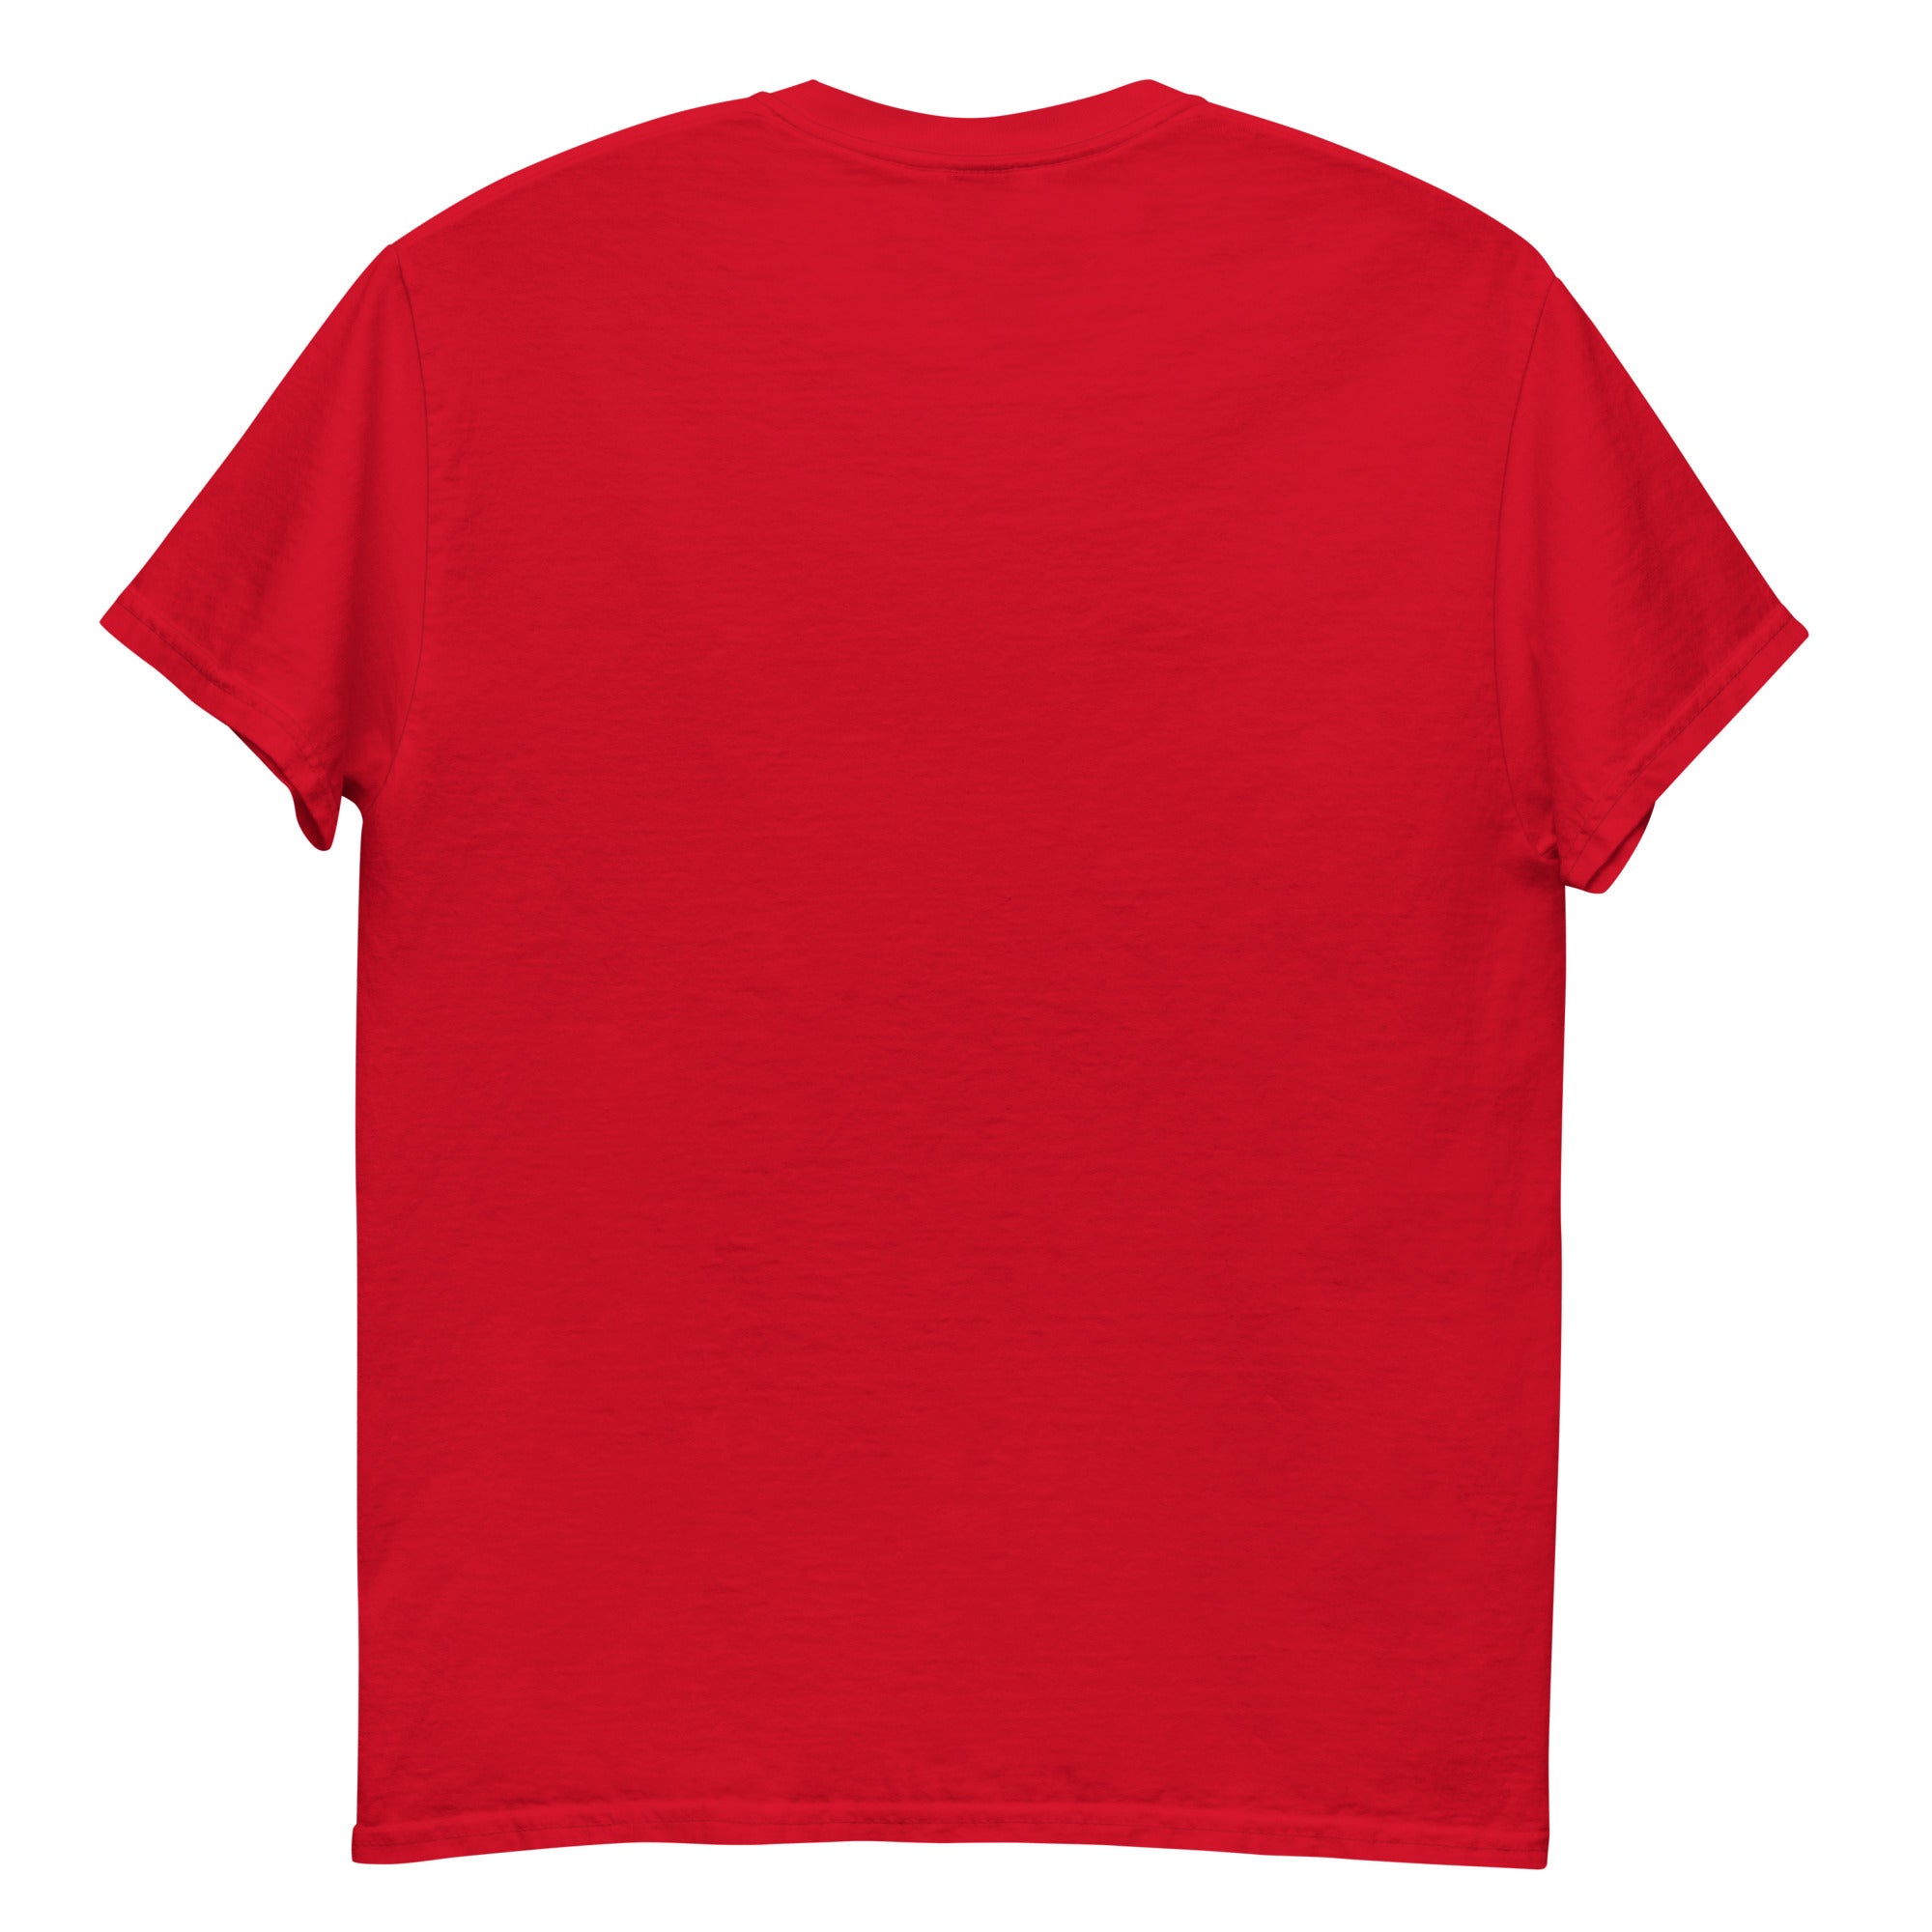 Olympus Men's Printed T-Shirt Black Text Logo